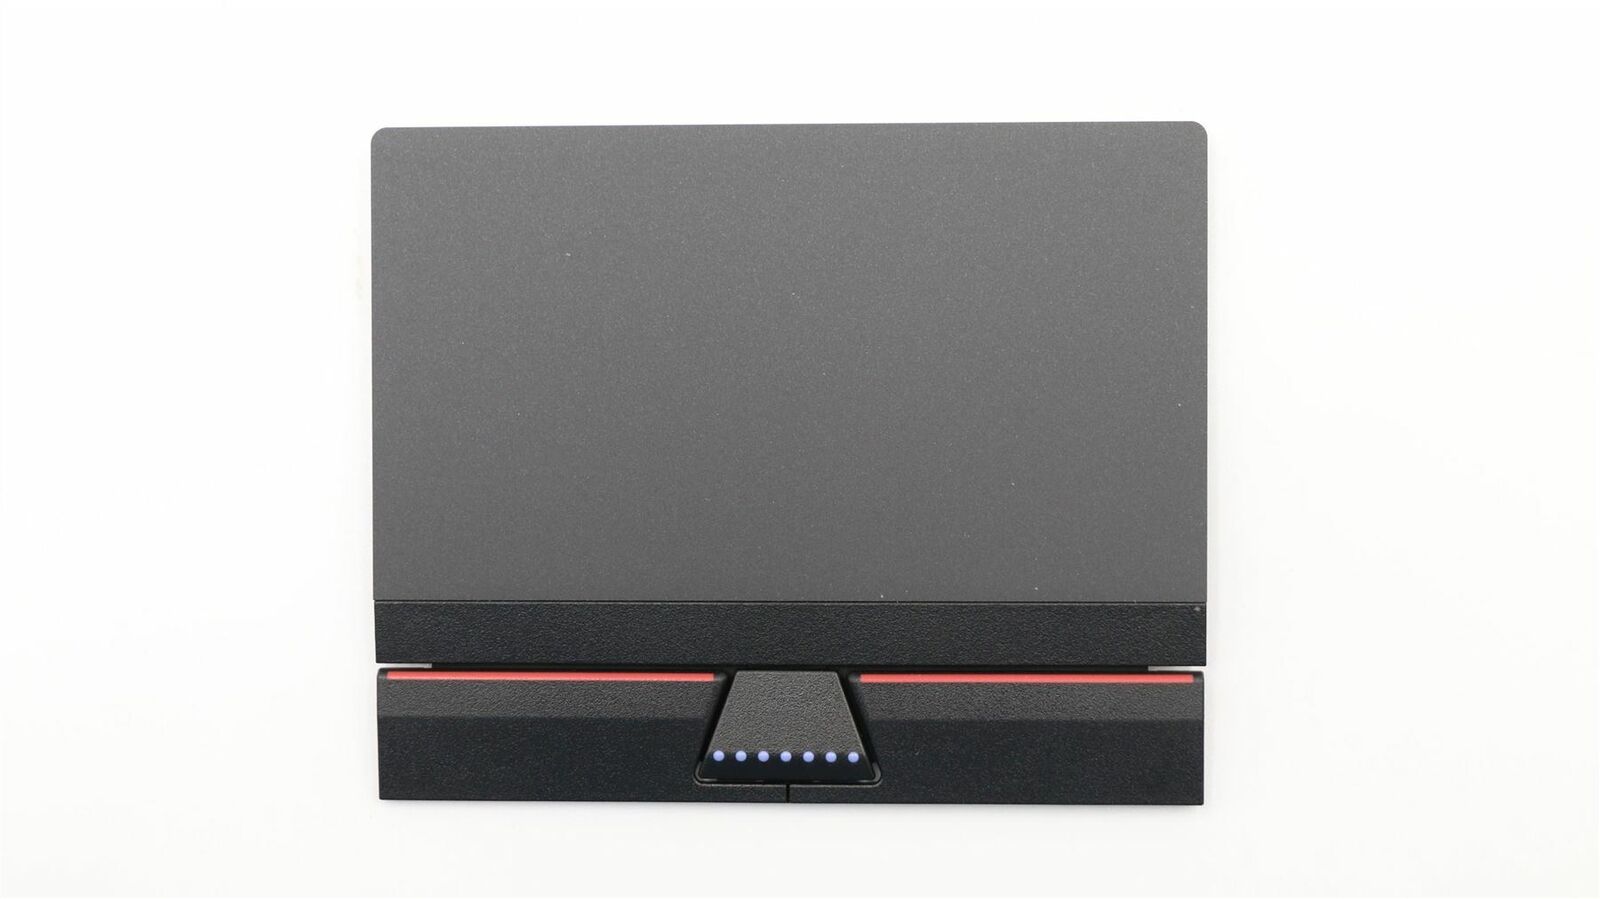 Lenovo ThinkPad E560p L560 Touchpad Trackpad PCB Board Black 00HM866 00UR953 00JT971 00UR956